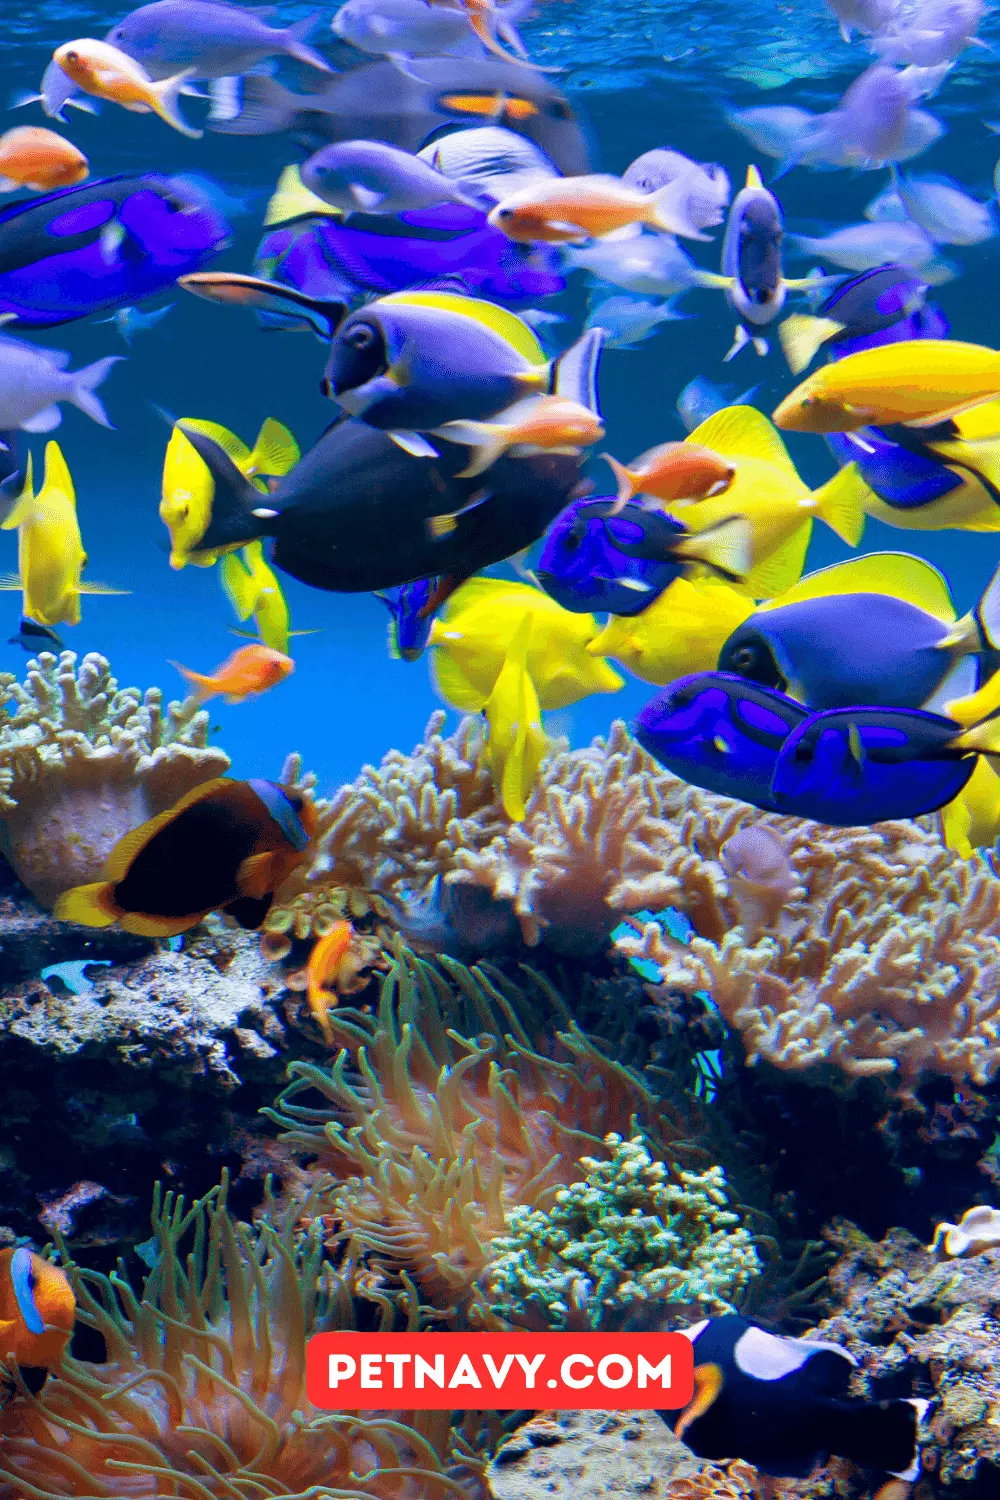 7 Best Types of Aquarium Heaters for Optimal Fish Health